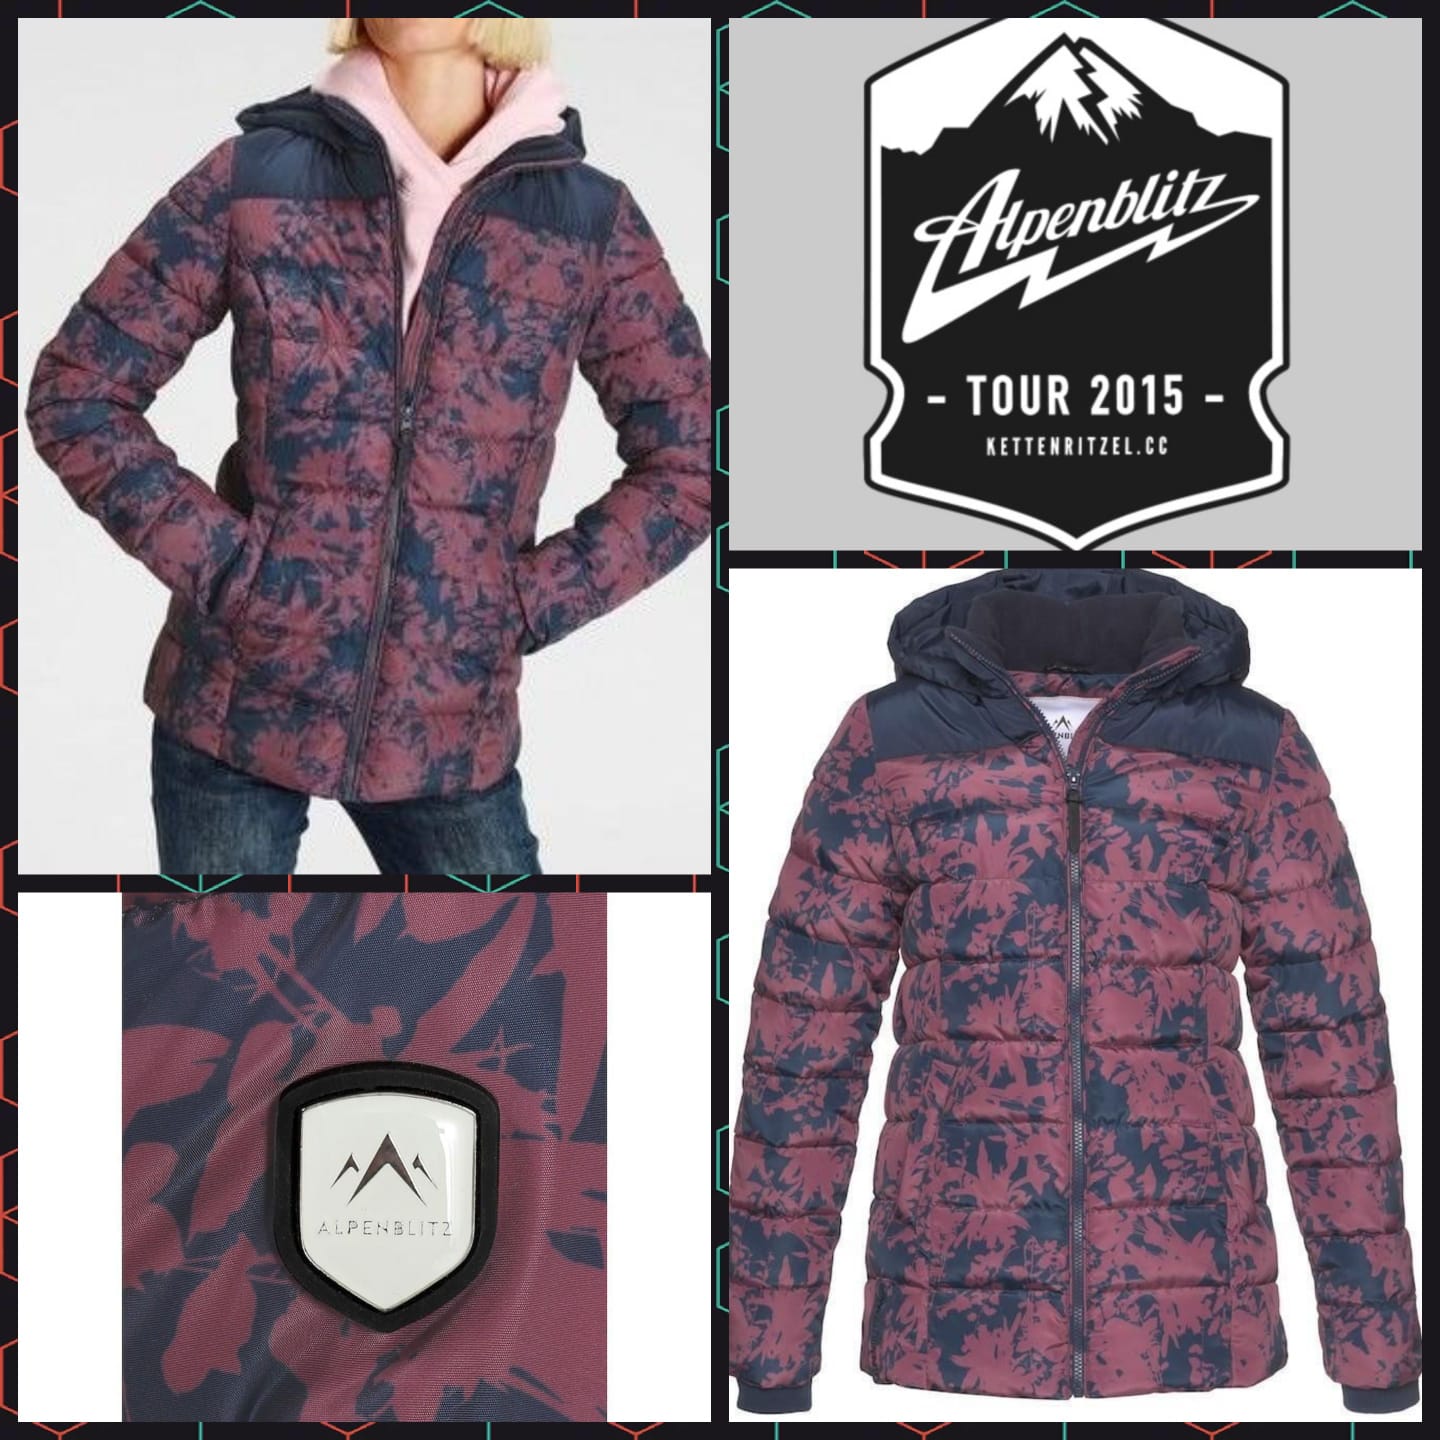 Women's warm jacket from Alpenblitz